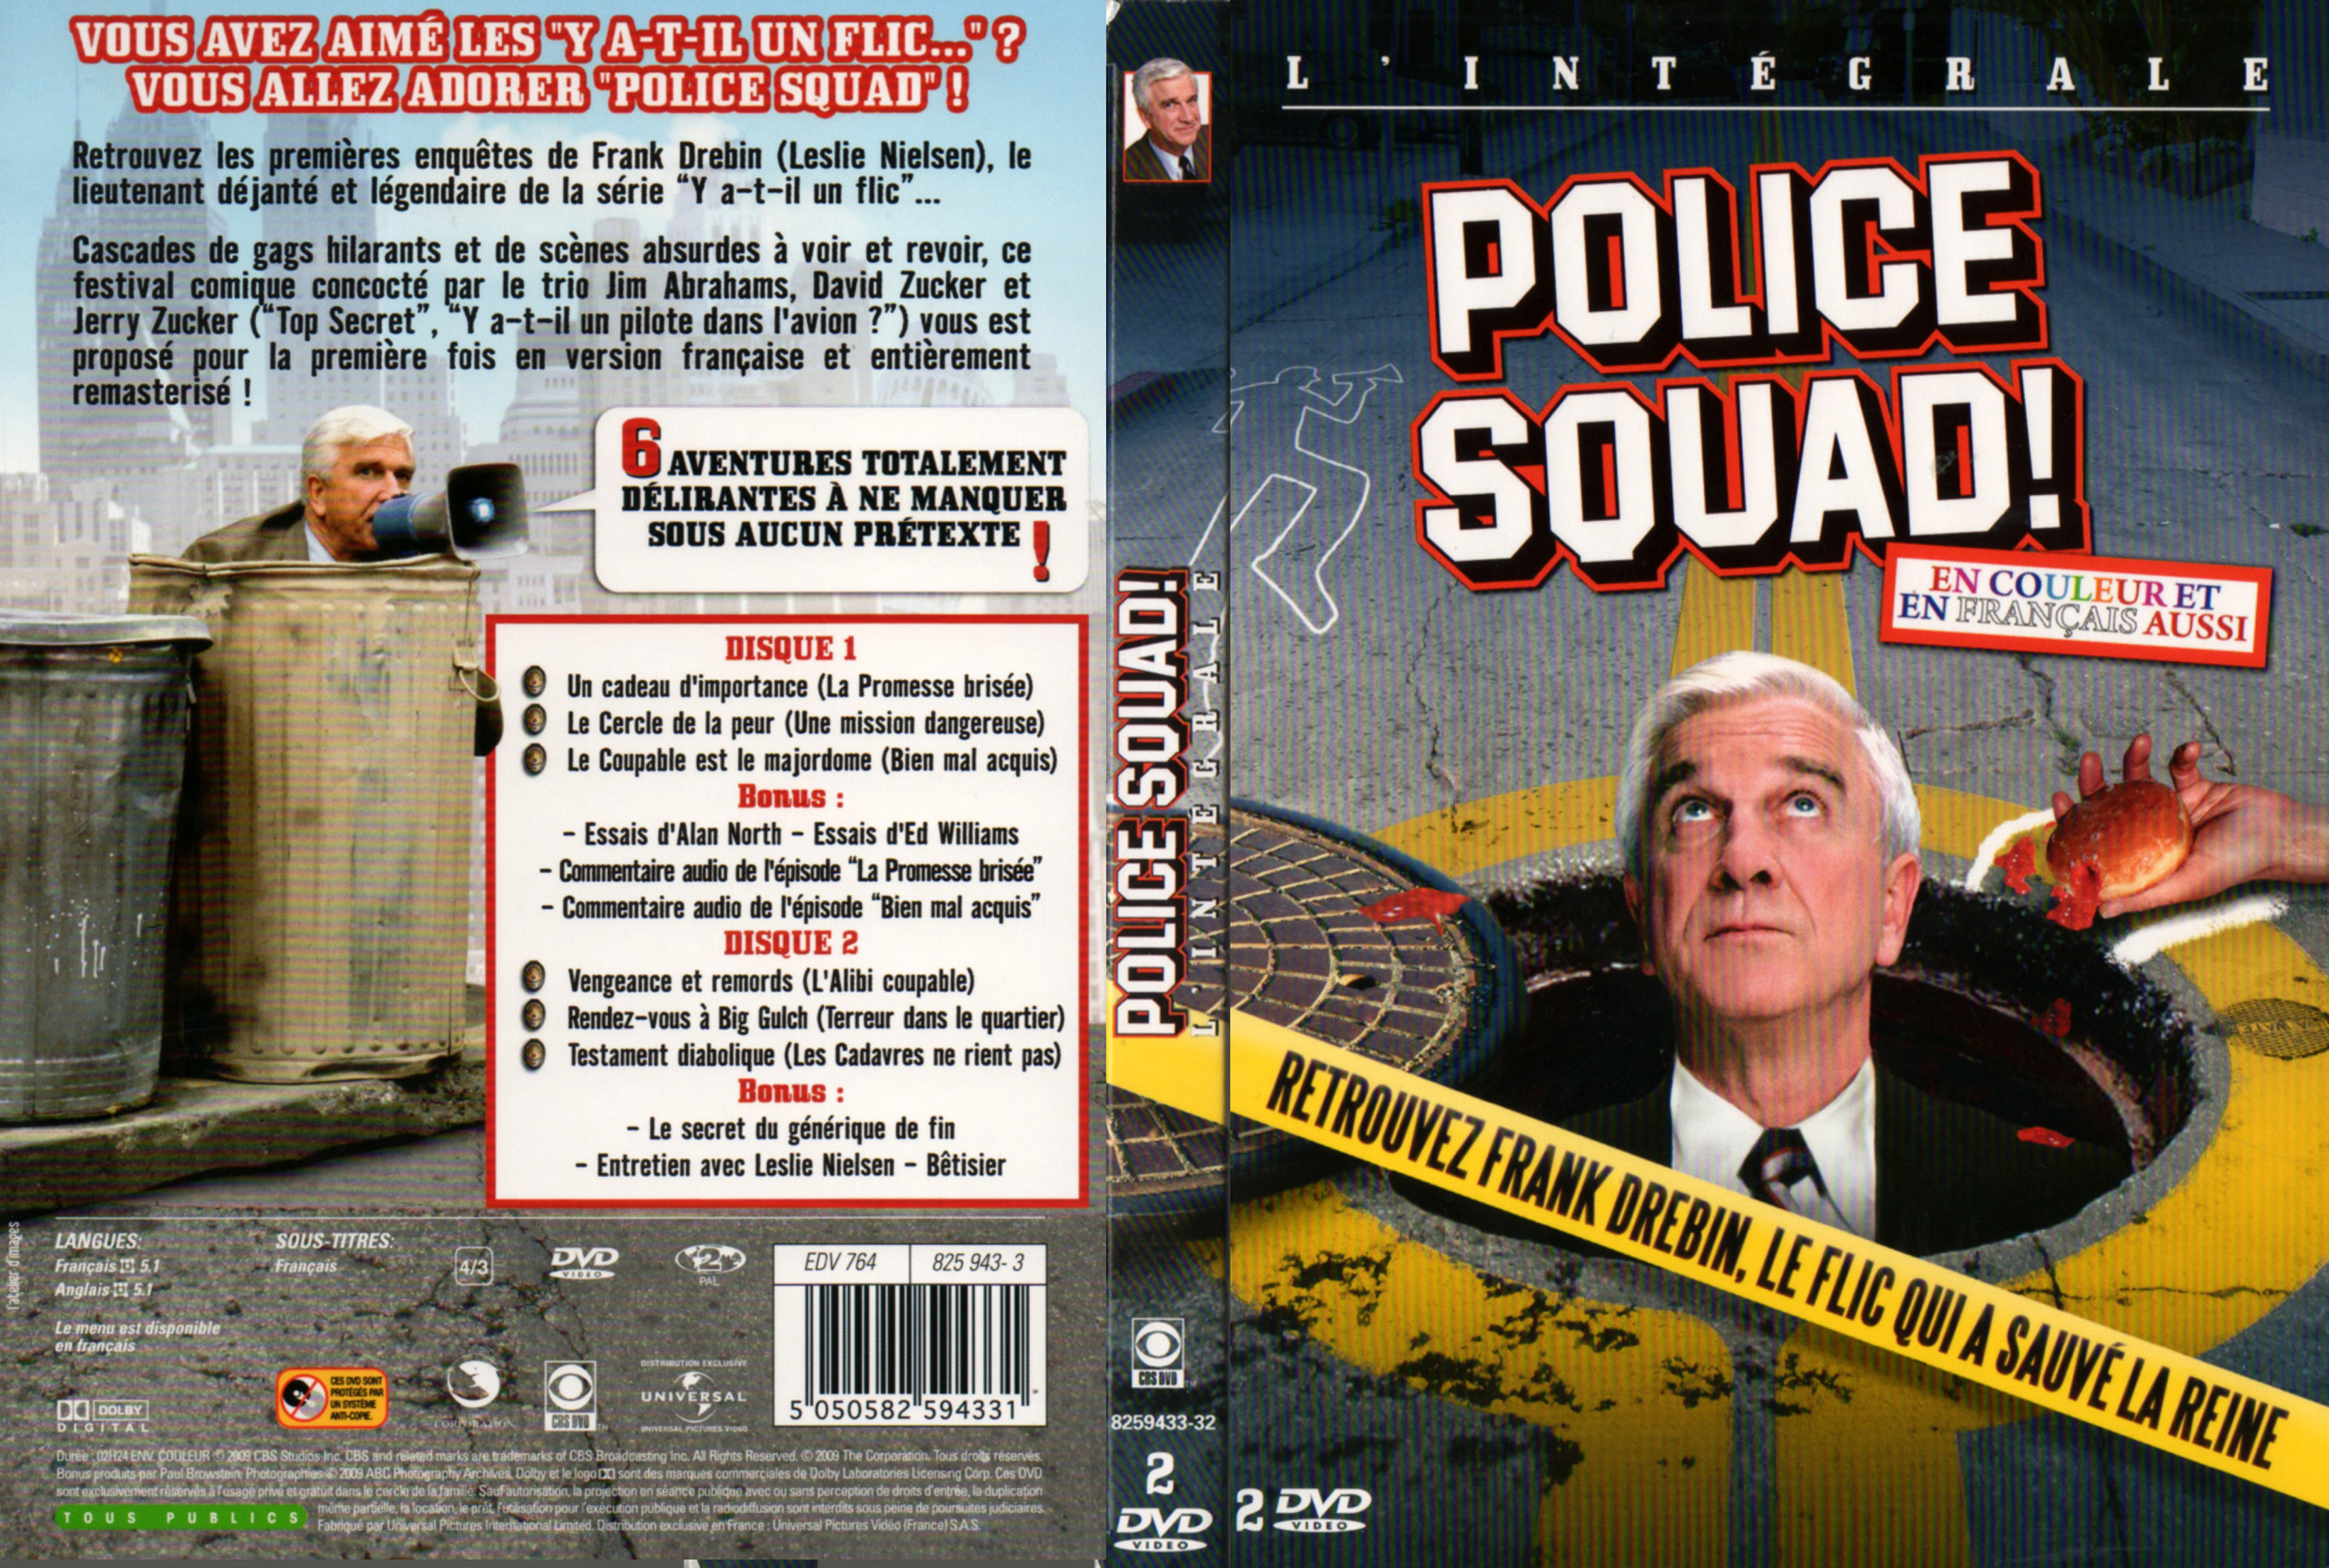 Jaquette DVD Police squad COFFRET